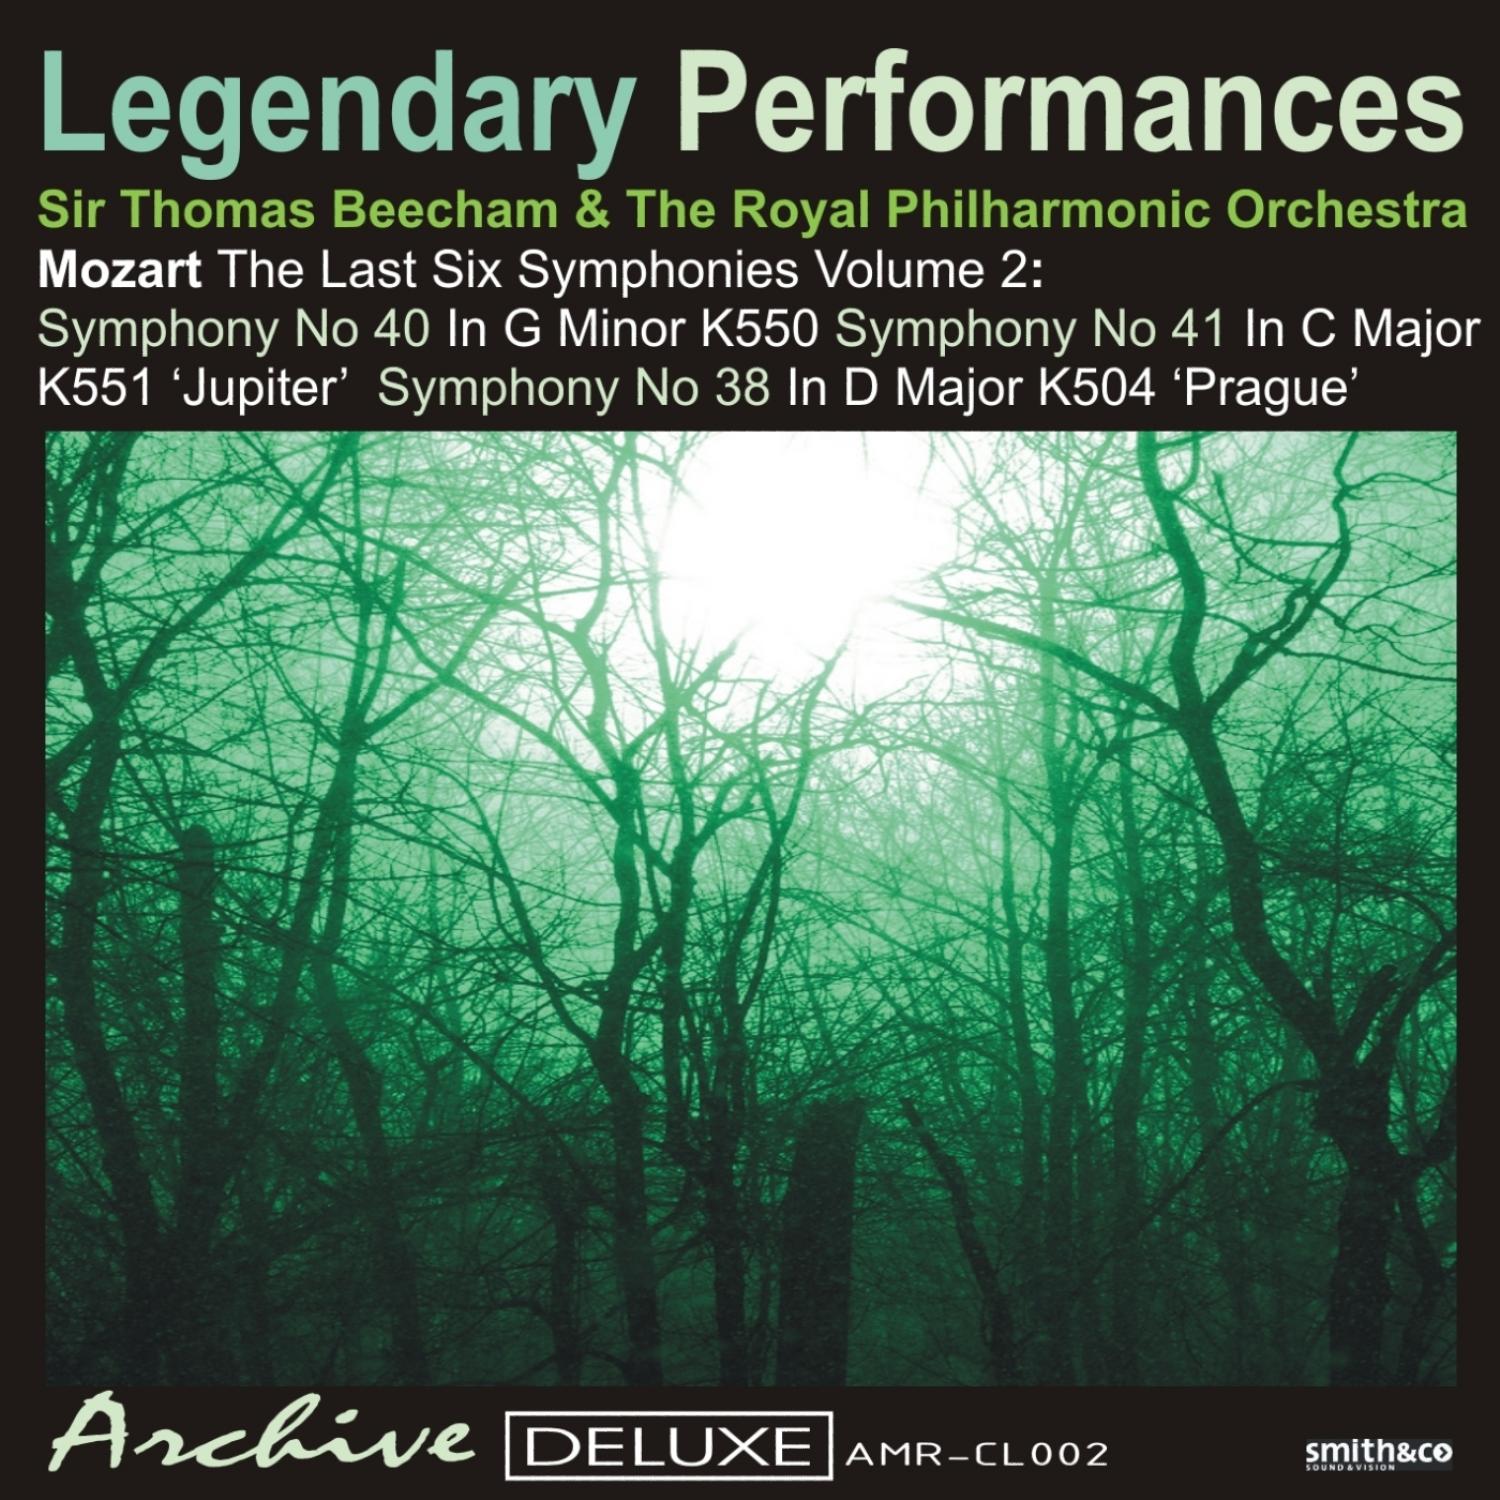 Mozart: The Last 6 Symphonies Vol. 2 - Legendary Performances